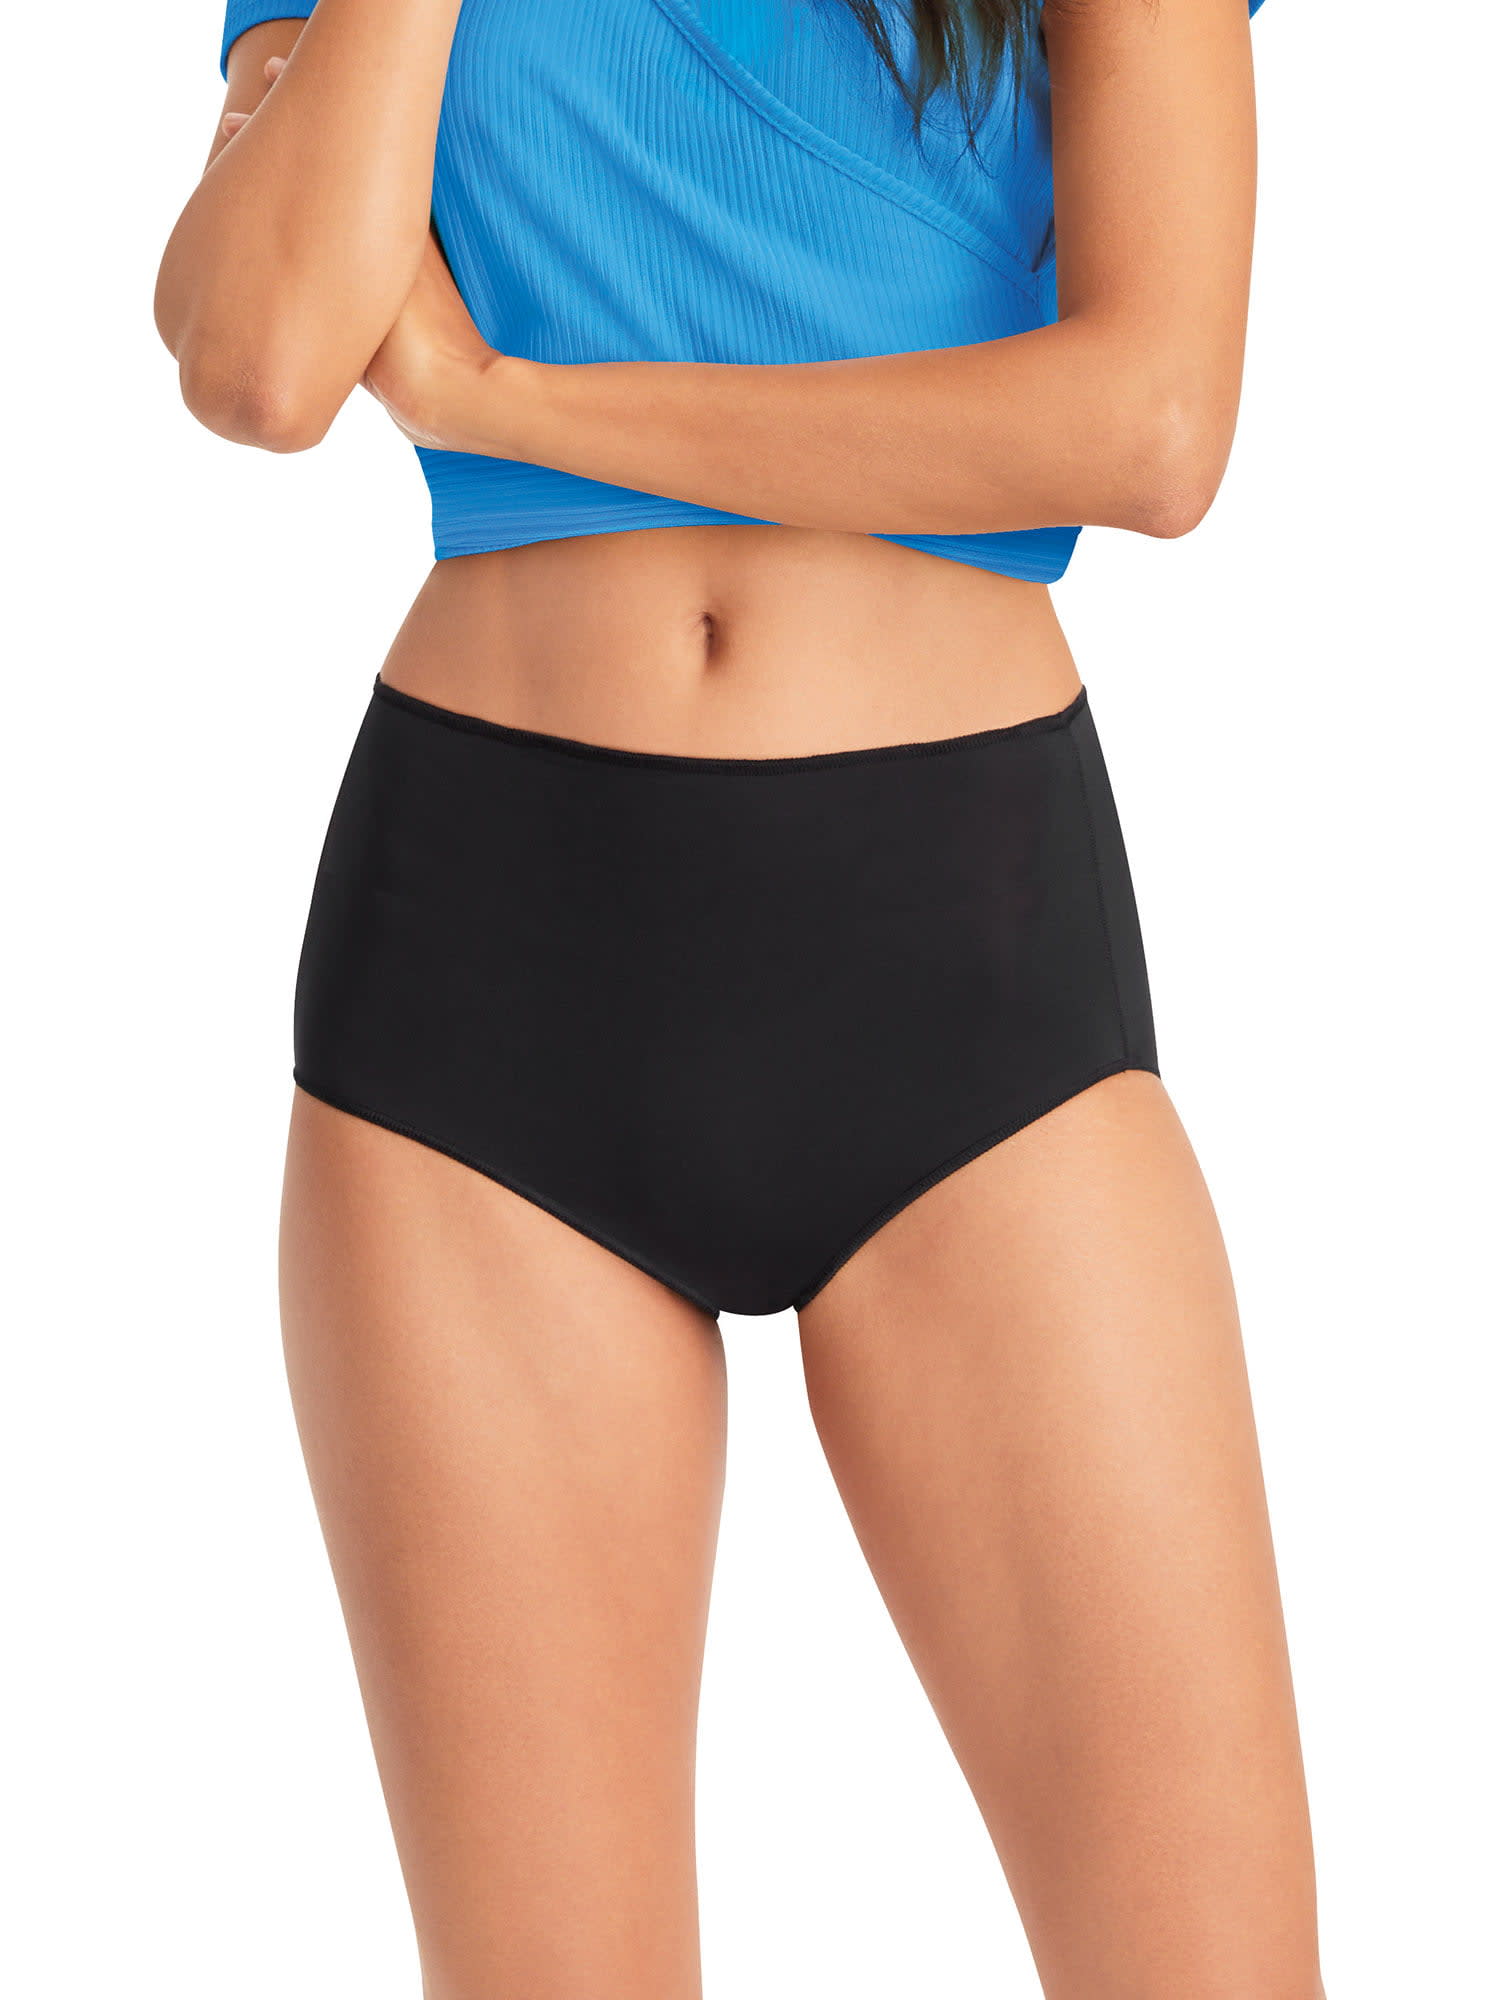 Hanes Women's Cool Comfort Cotton Bikini Underwear, 10-Pack - DroneUp  Delivery